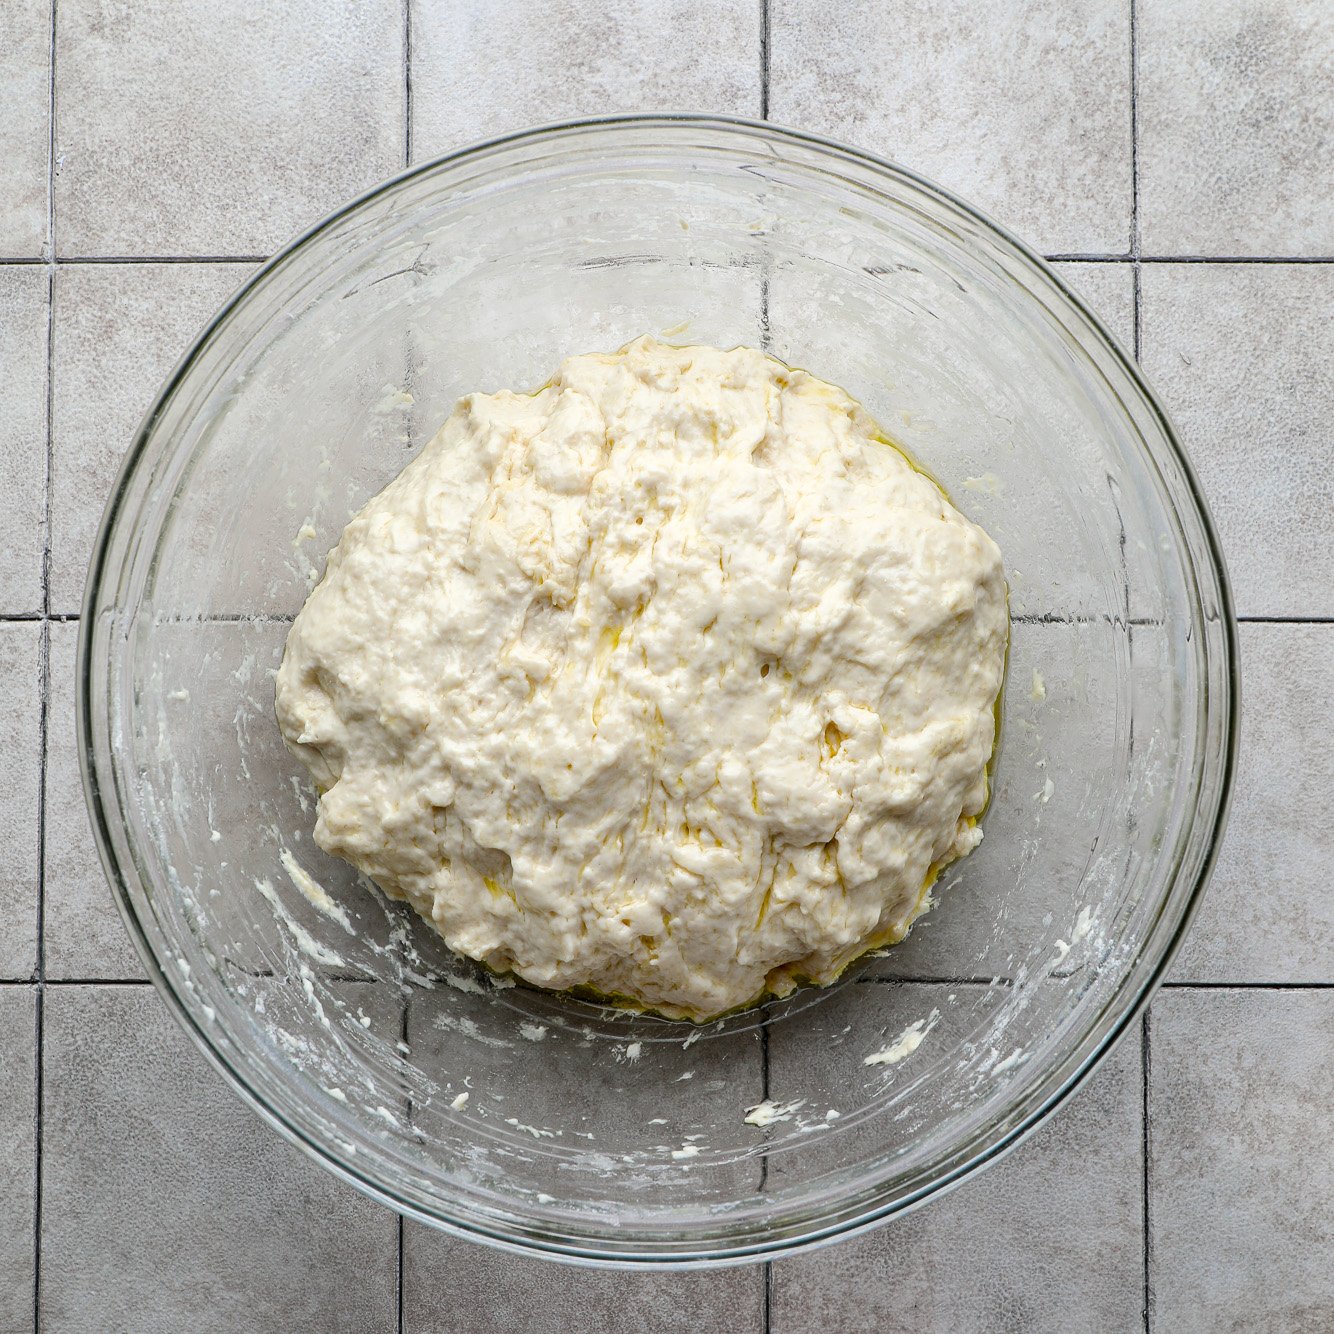 a ball of vegan focaccia dough in a glass bowl.